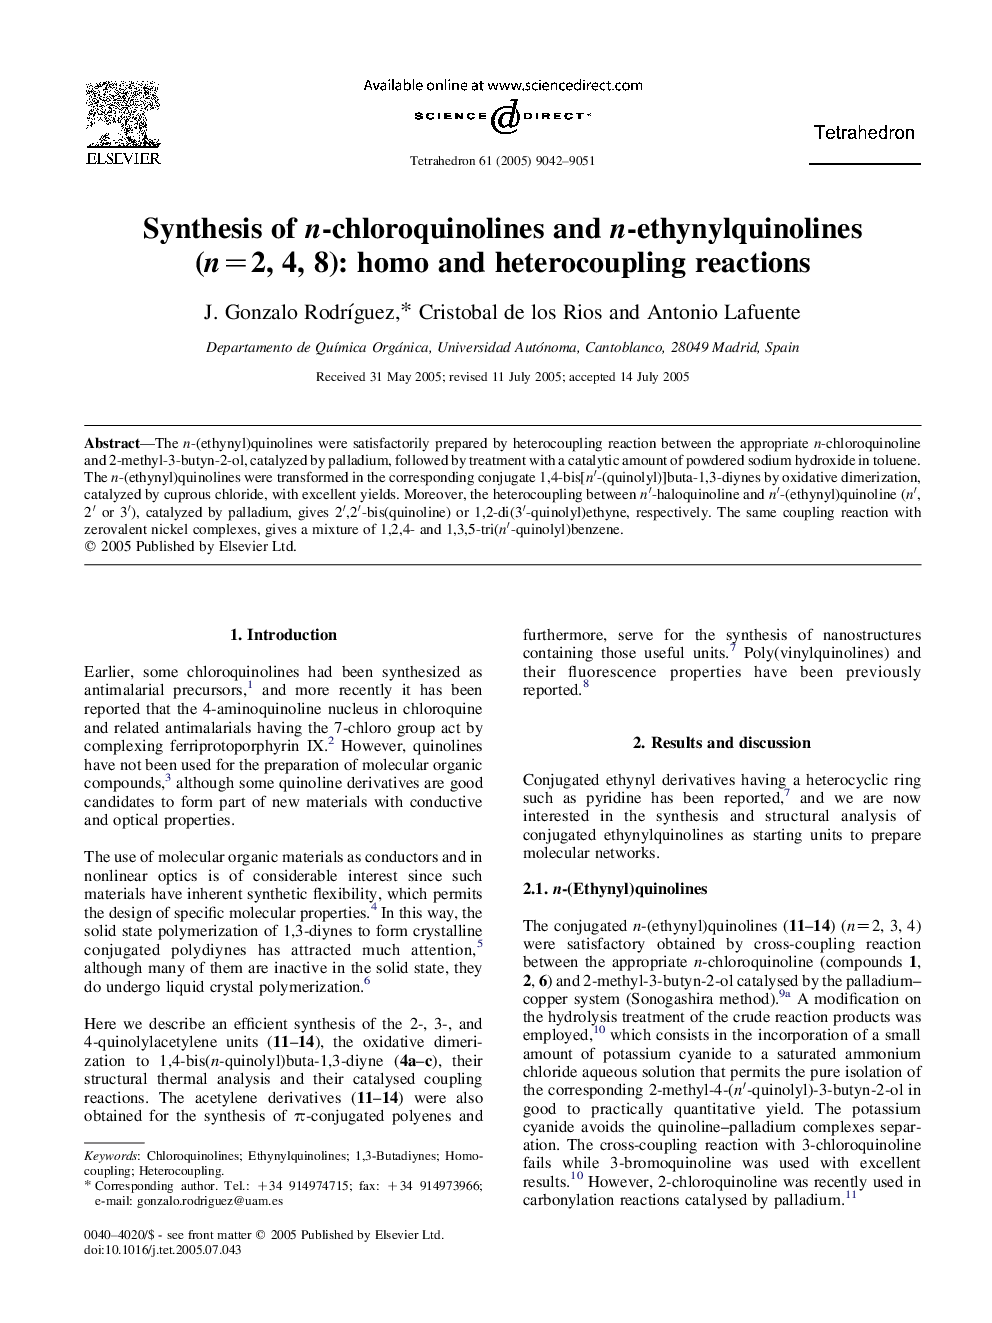 Synthesis of n-chloroquinolines and n-ethynylquinolines (n=2, 4, 8): homo and heterocoupling reactions